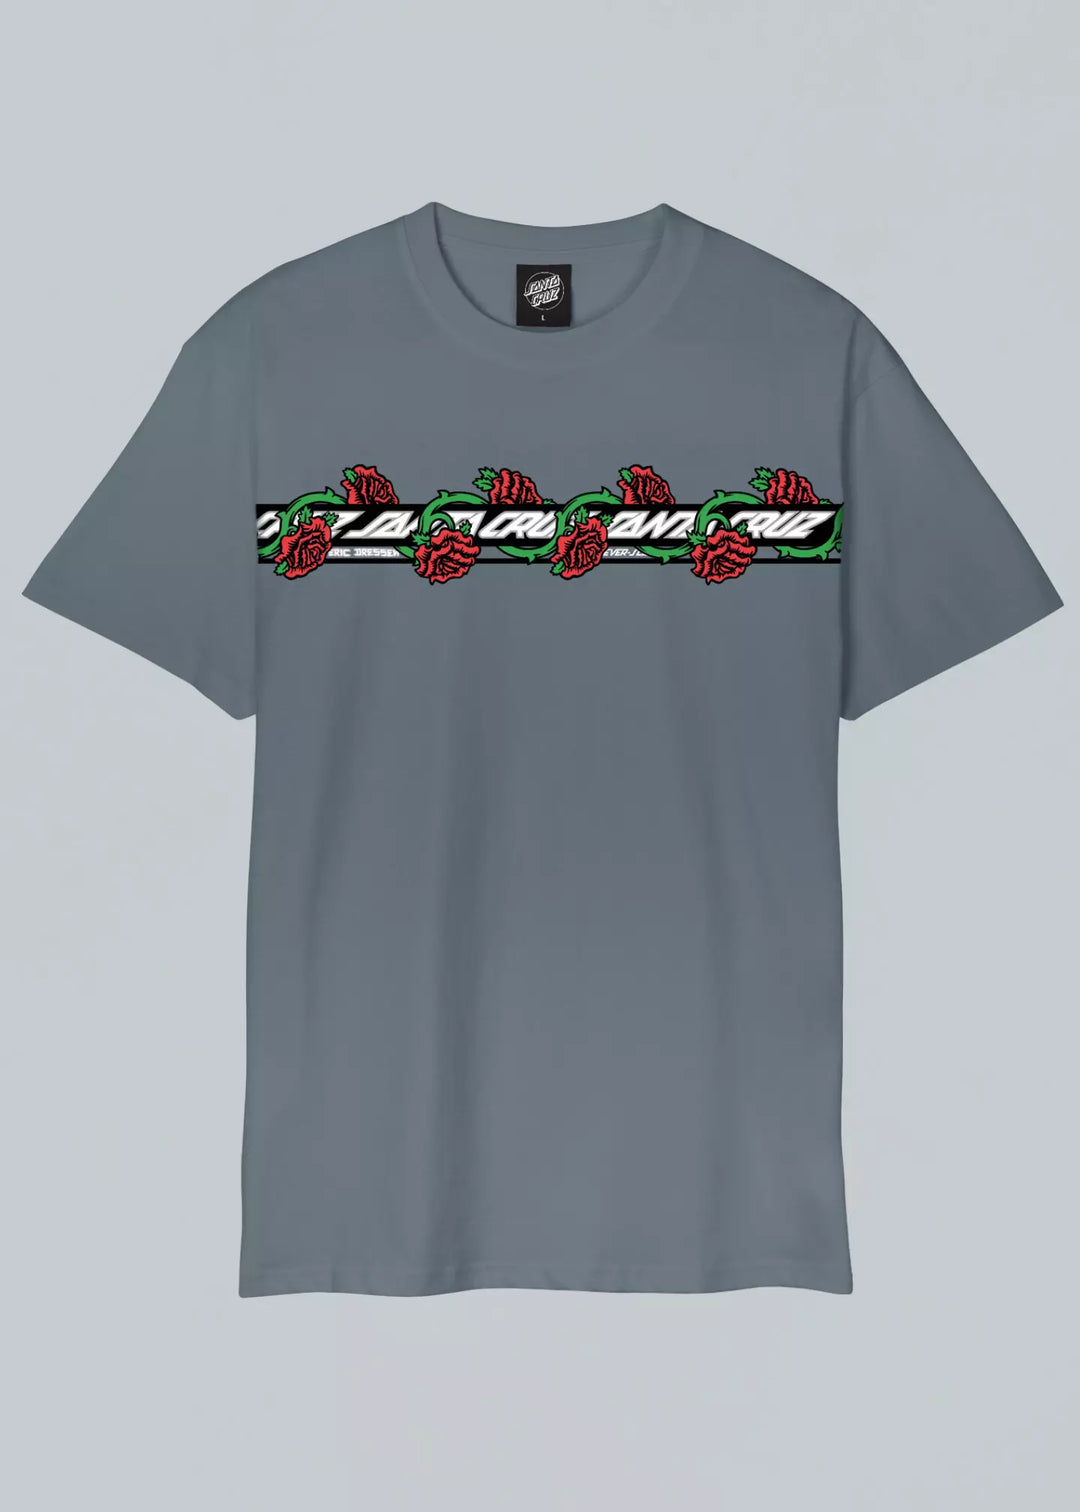 Santa Cruz Dressen Roses T-Shirt Iron